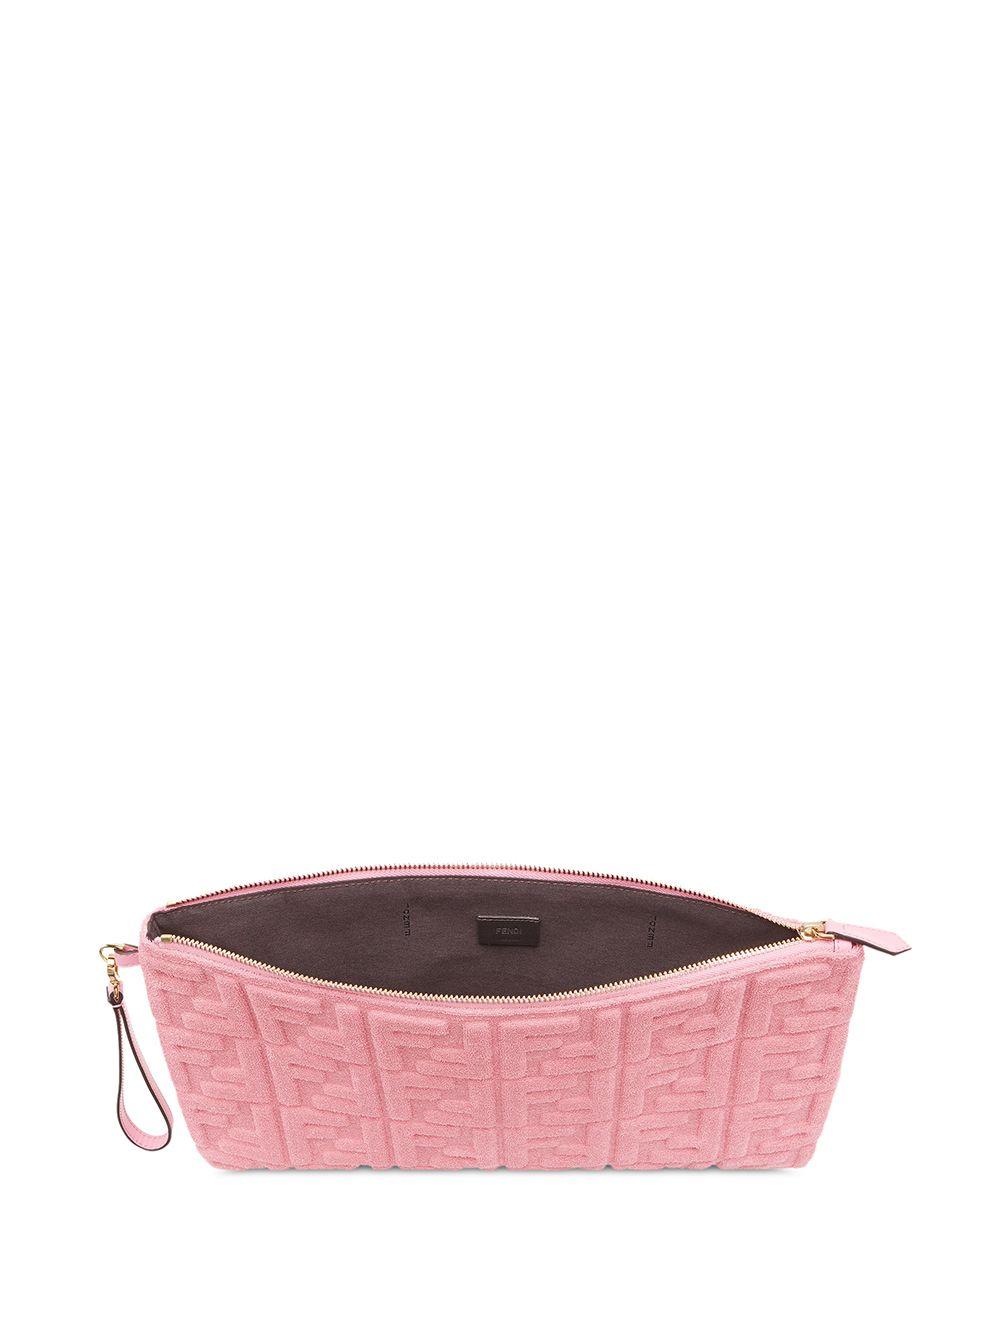 Fendi large flat ff pouch in pinks-Via Manzoni